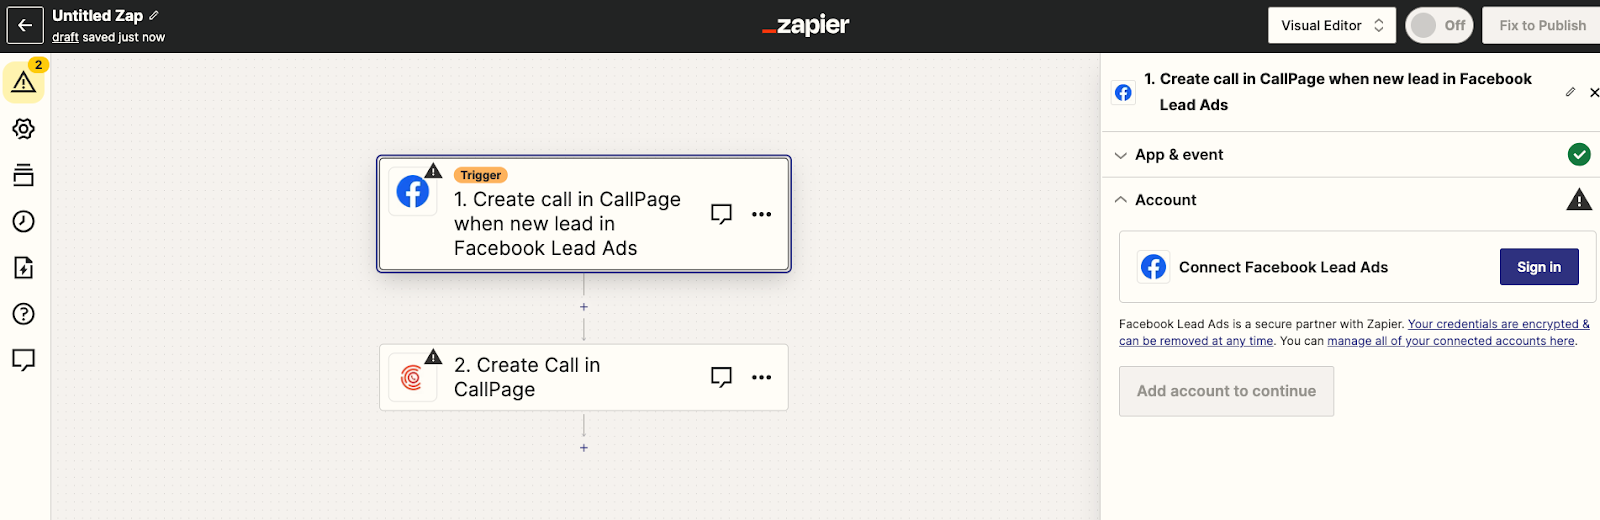 Facebook Ads and CallPage integration through Zapier